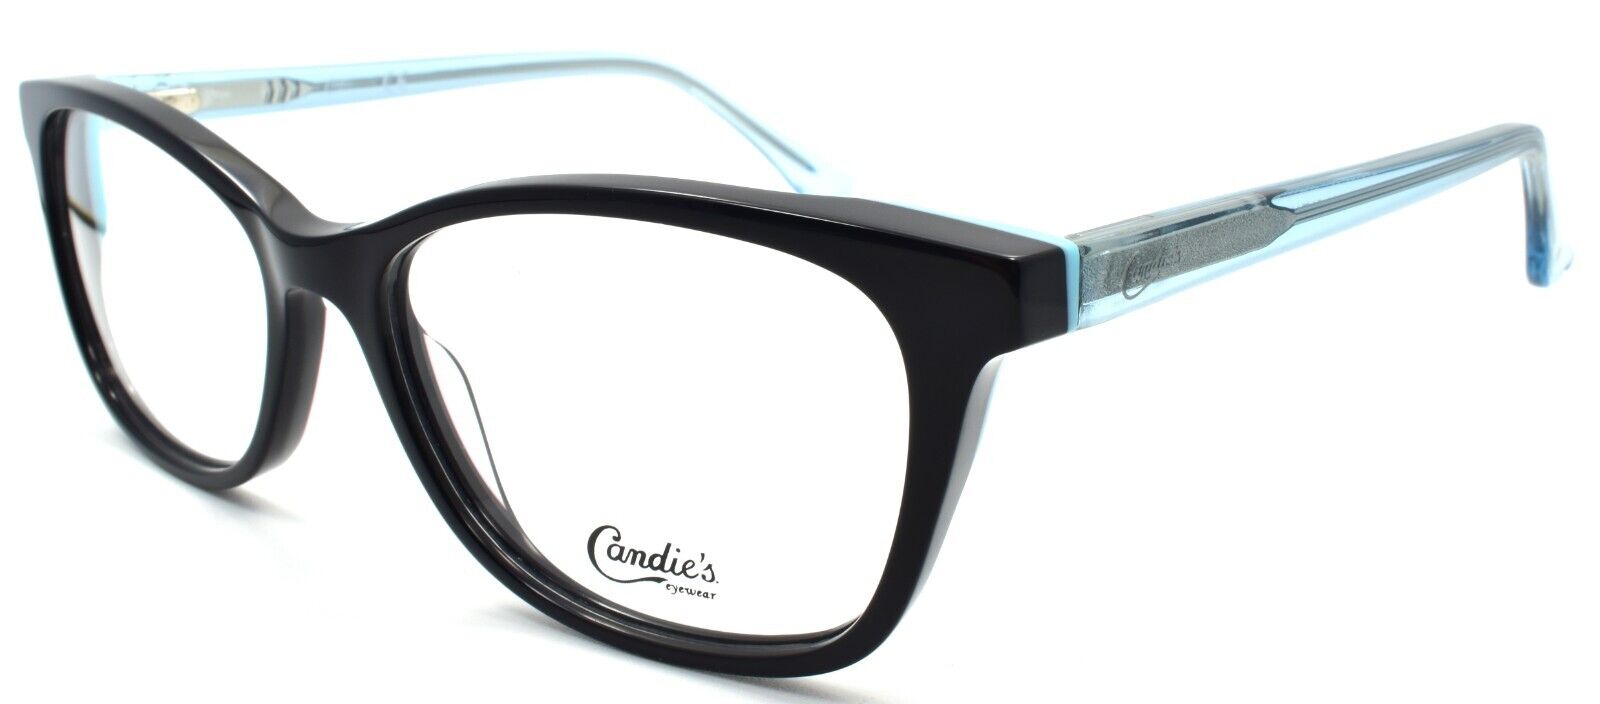 1-Candies CA0176 001 Women's Eyeglasses Frames Cat Eye 53-16-140 Black-889214072443-IKSpecs